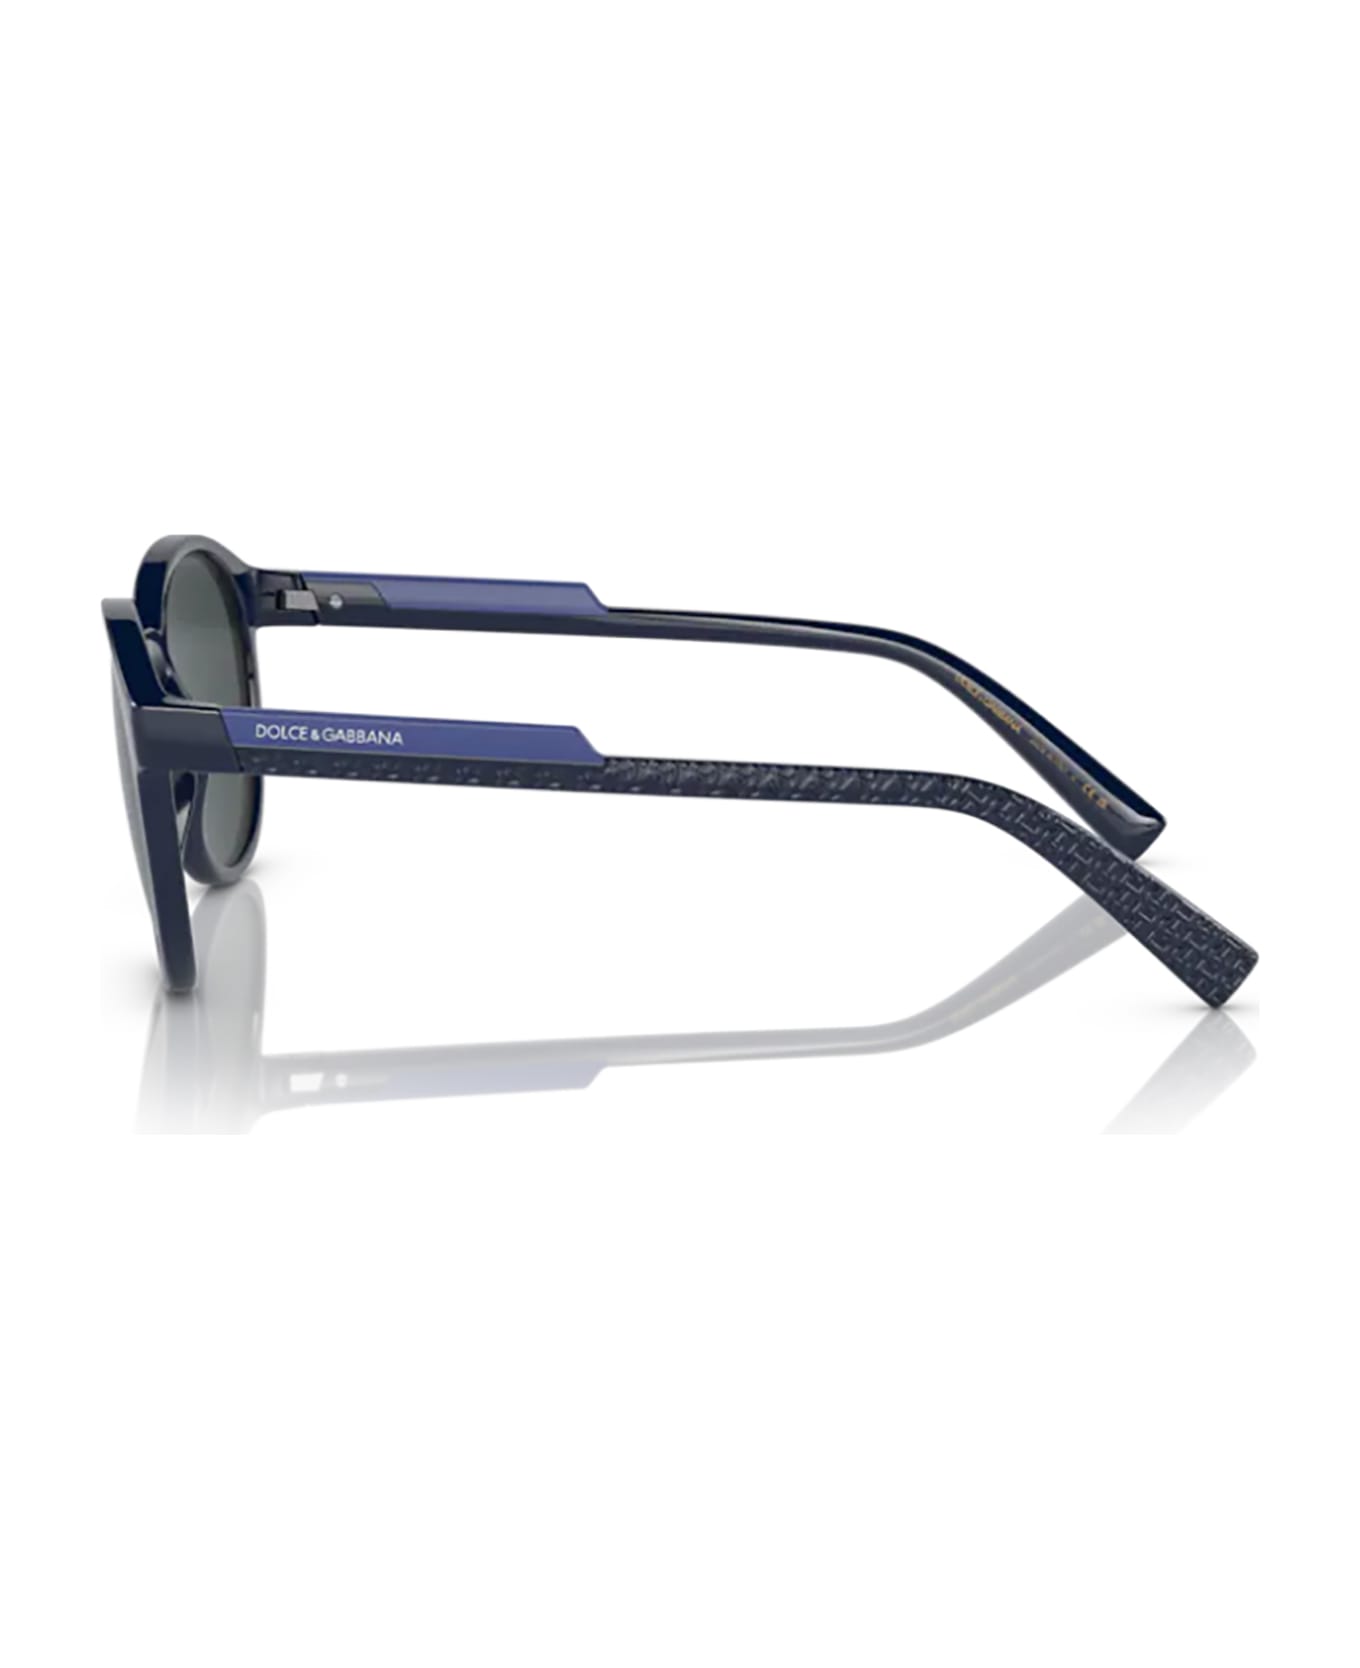 Dolce & Gabbana Eyewear 0DG6180 Sunglasses